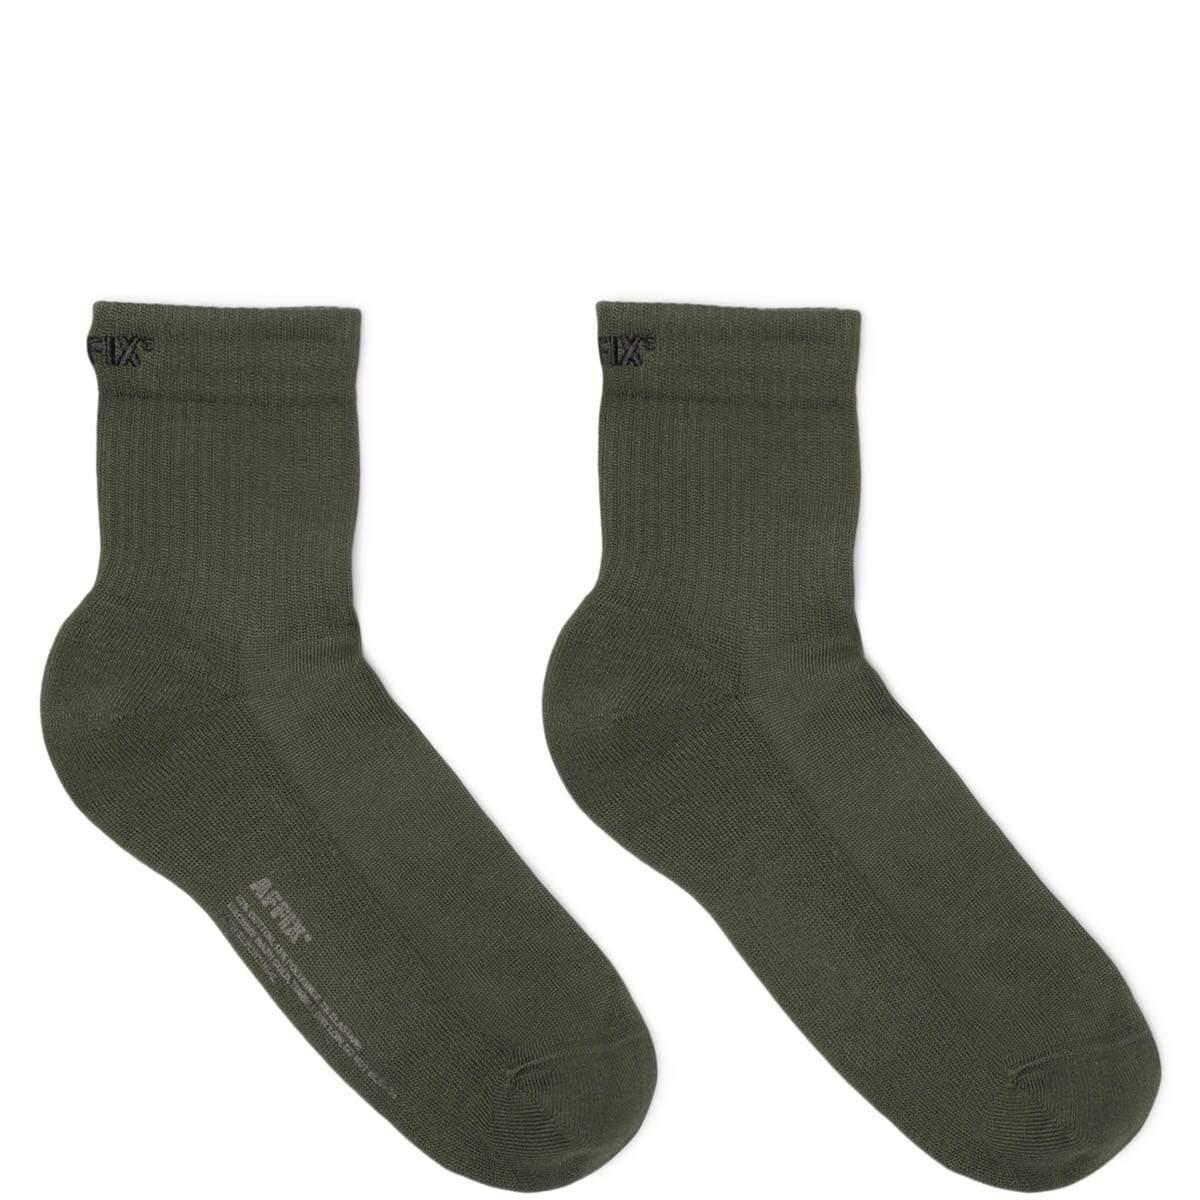 AFFIX Socks BLACK/OLIVE/GREY / O/S SHORT RIB SOCK 3 PACK